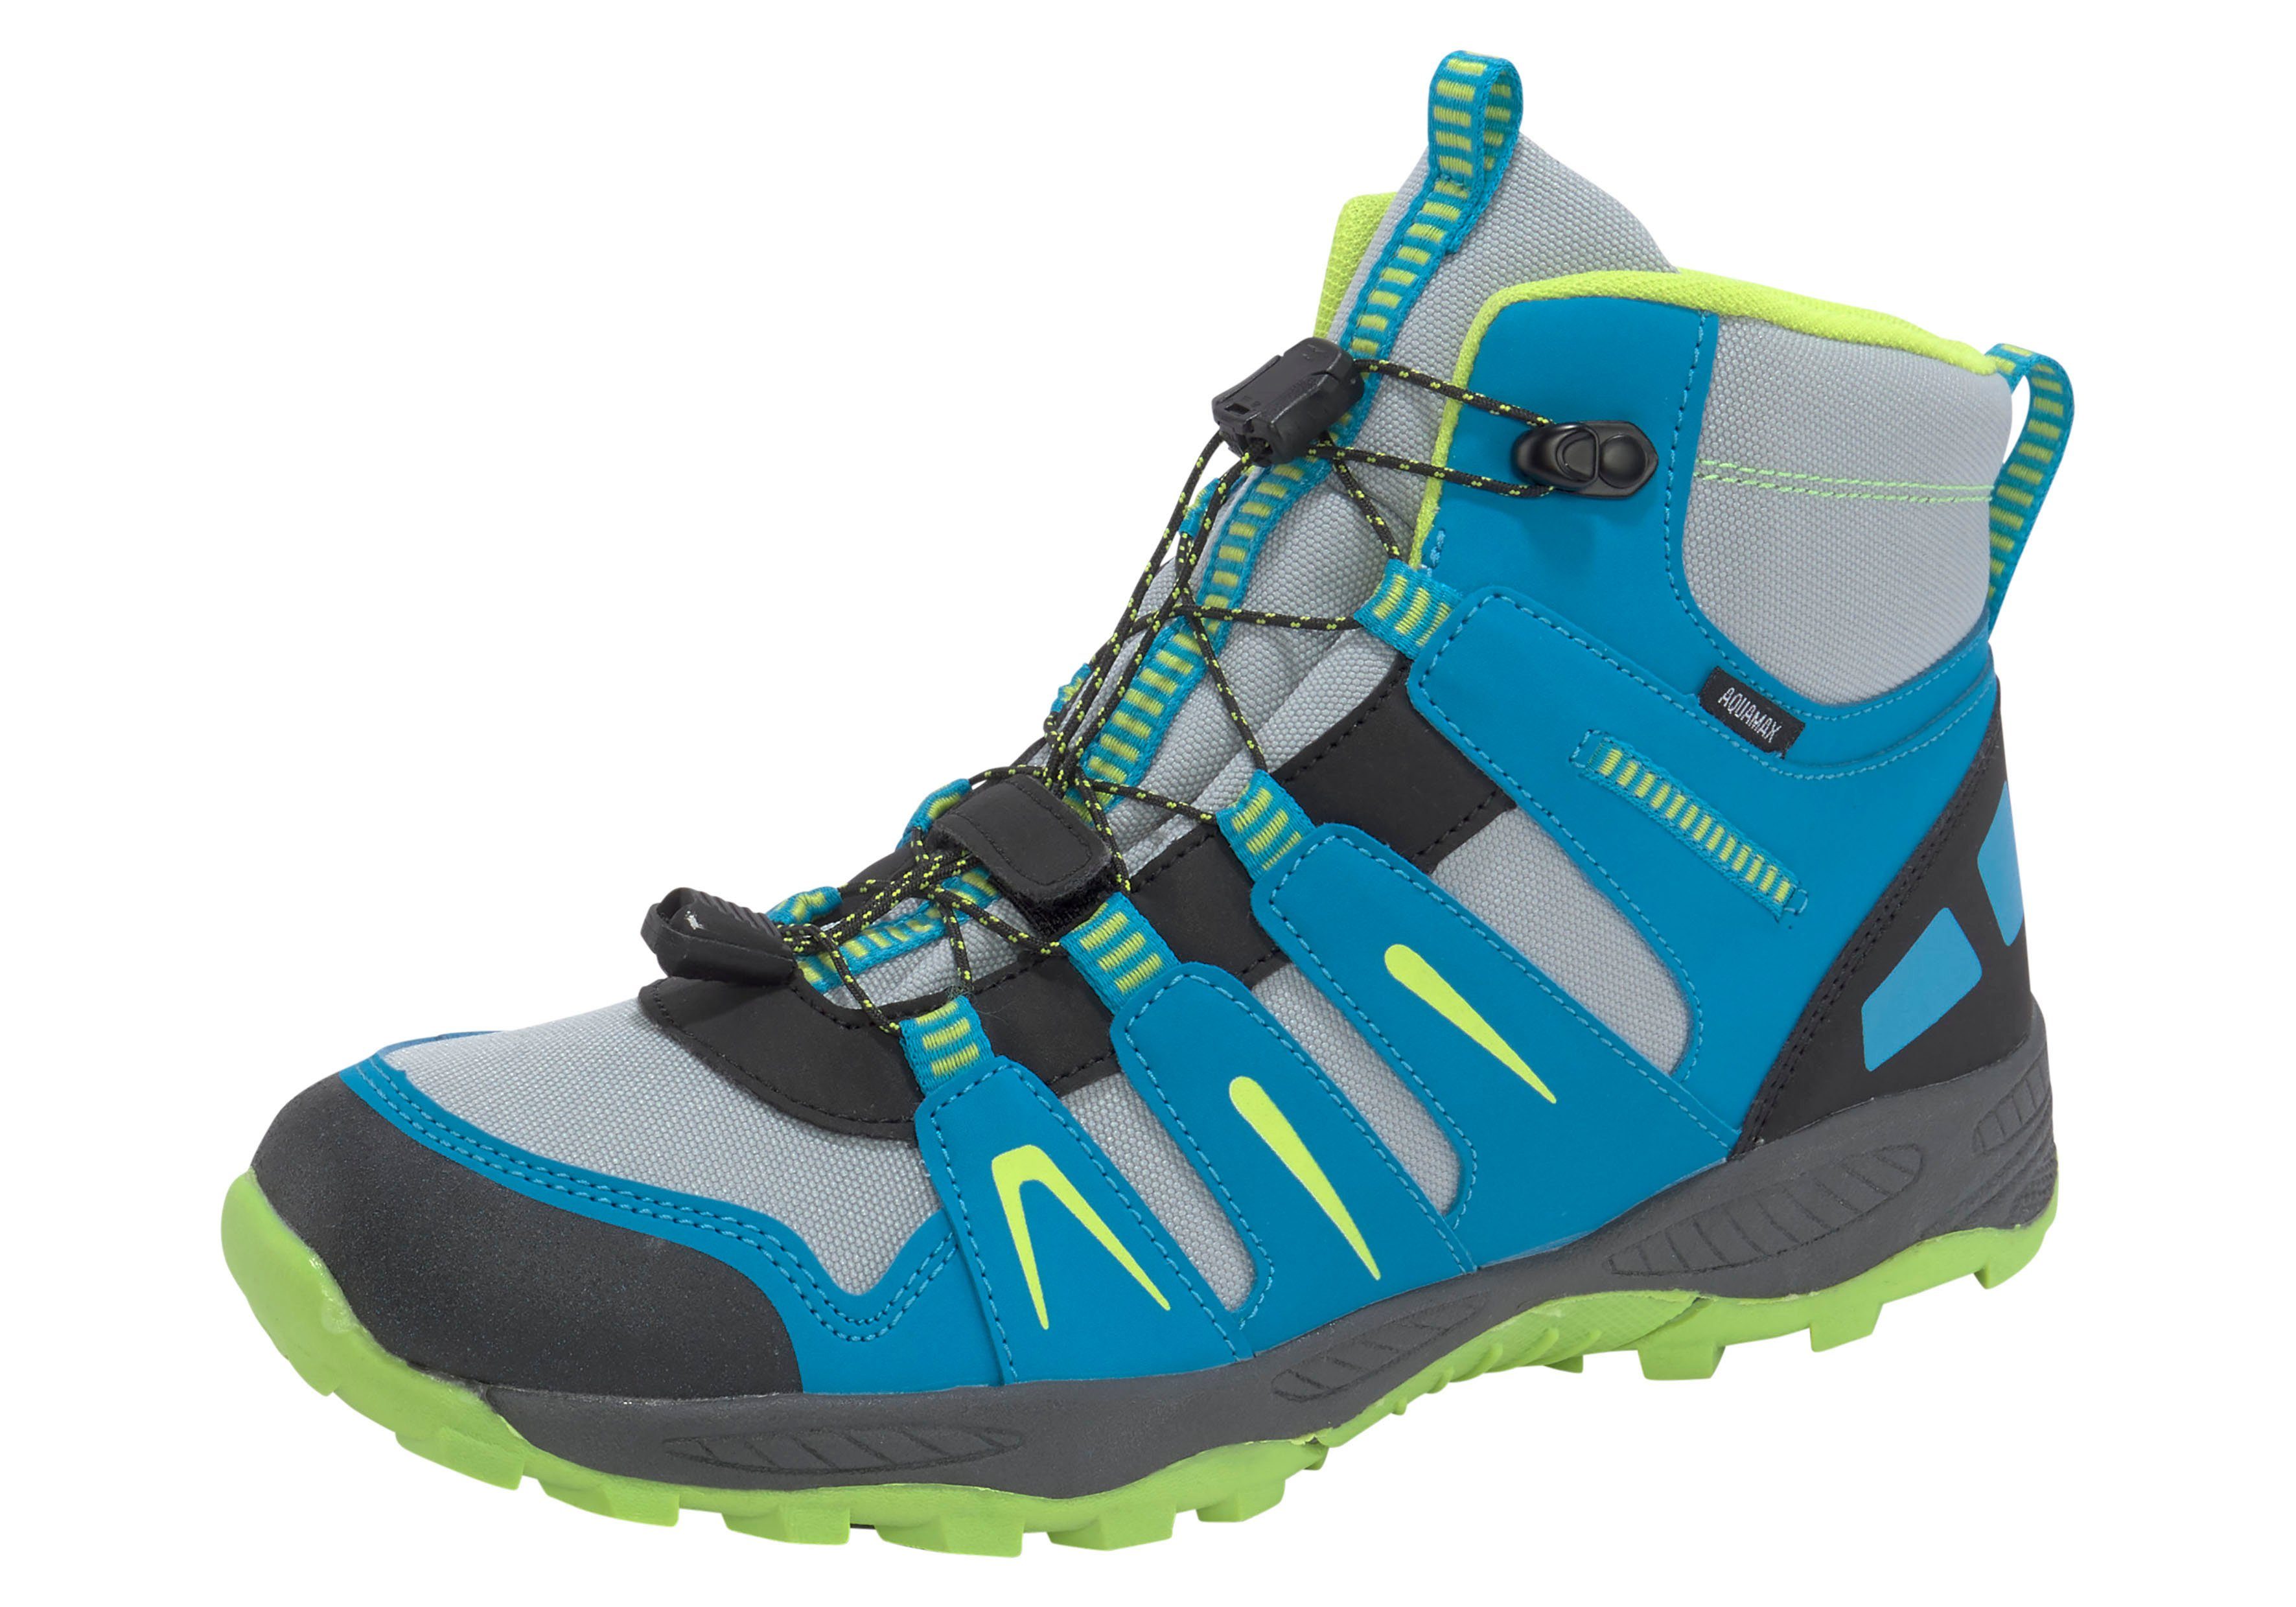 McKINLEY Sonnberg AQX MID Jr. Outdoorschuh wasserdichte Trekkingschuhe für Kinder blau-lime | Outdoorschuhe